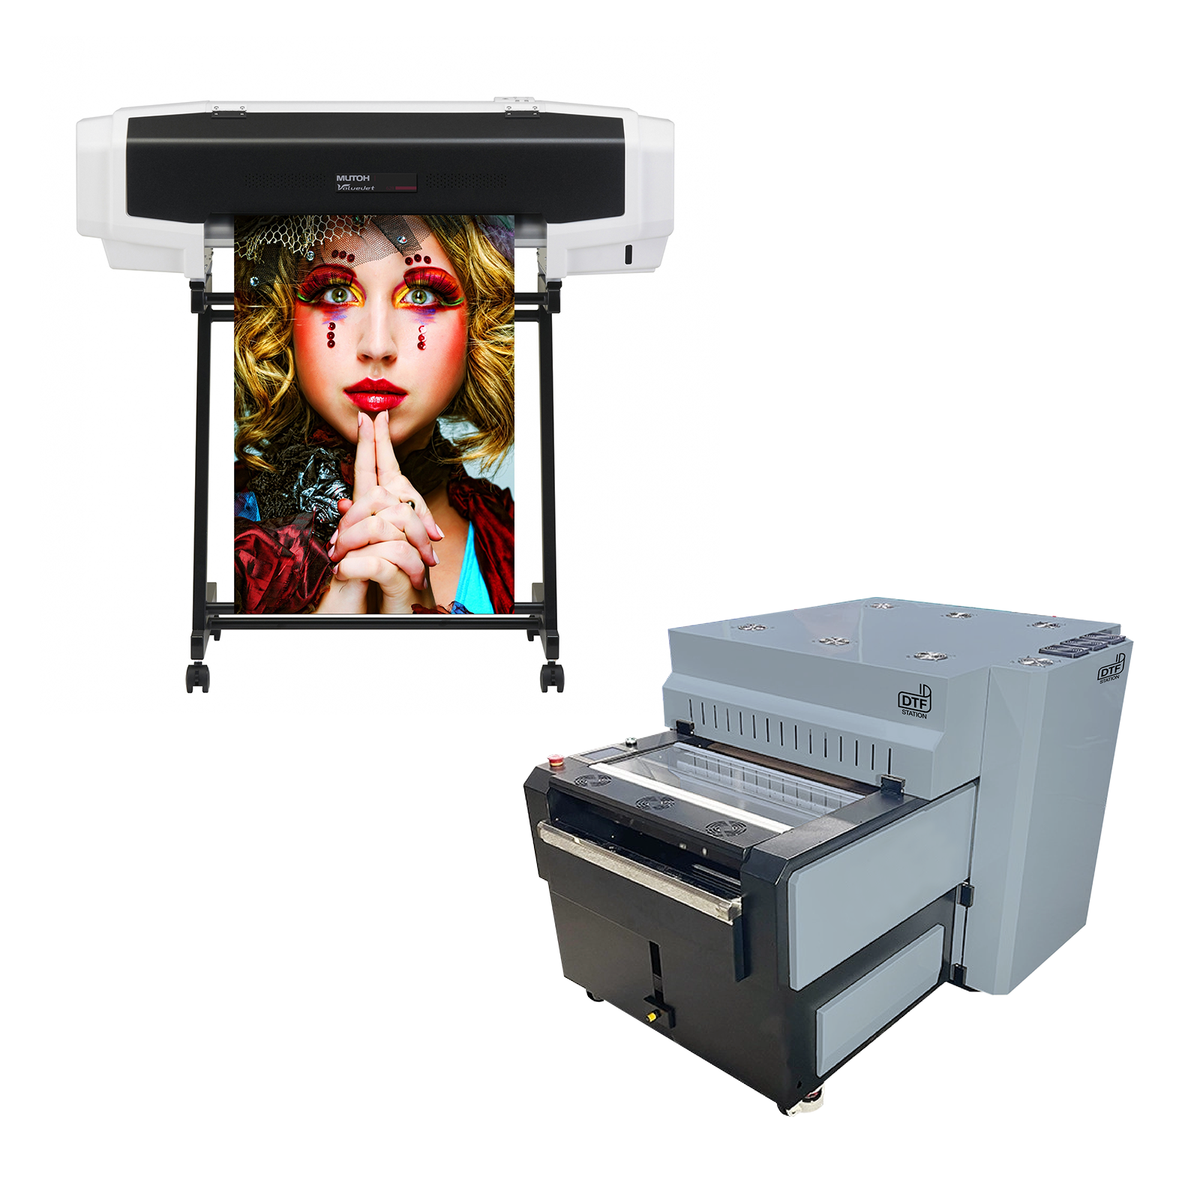 STS XPD-724 DTF Printer 24 Shaker-Heater Cartridge Package : Garment Printer Ink